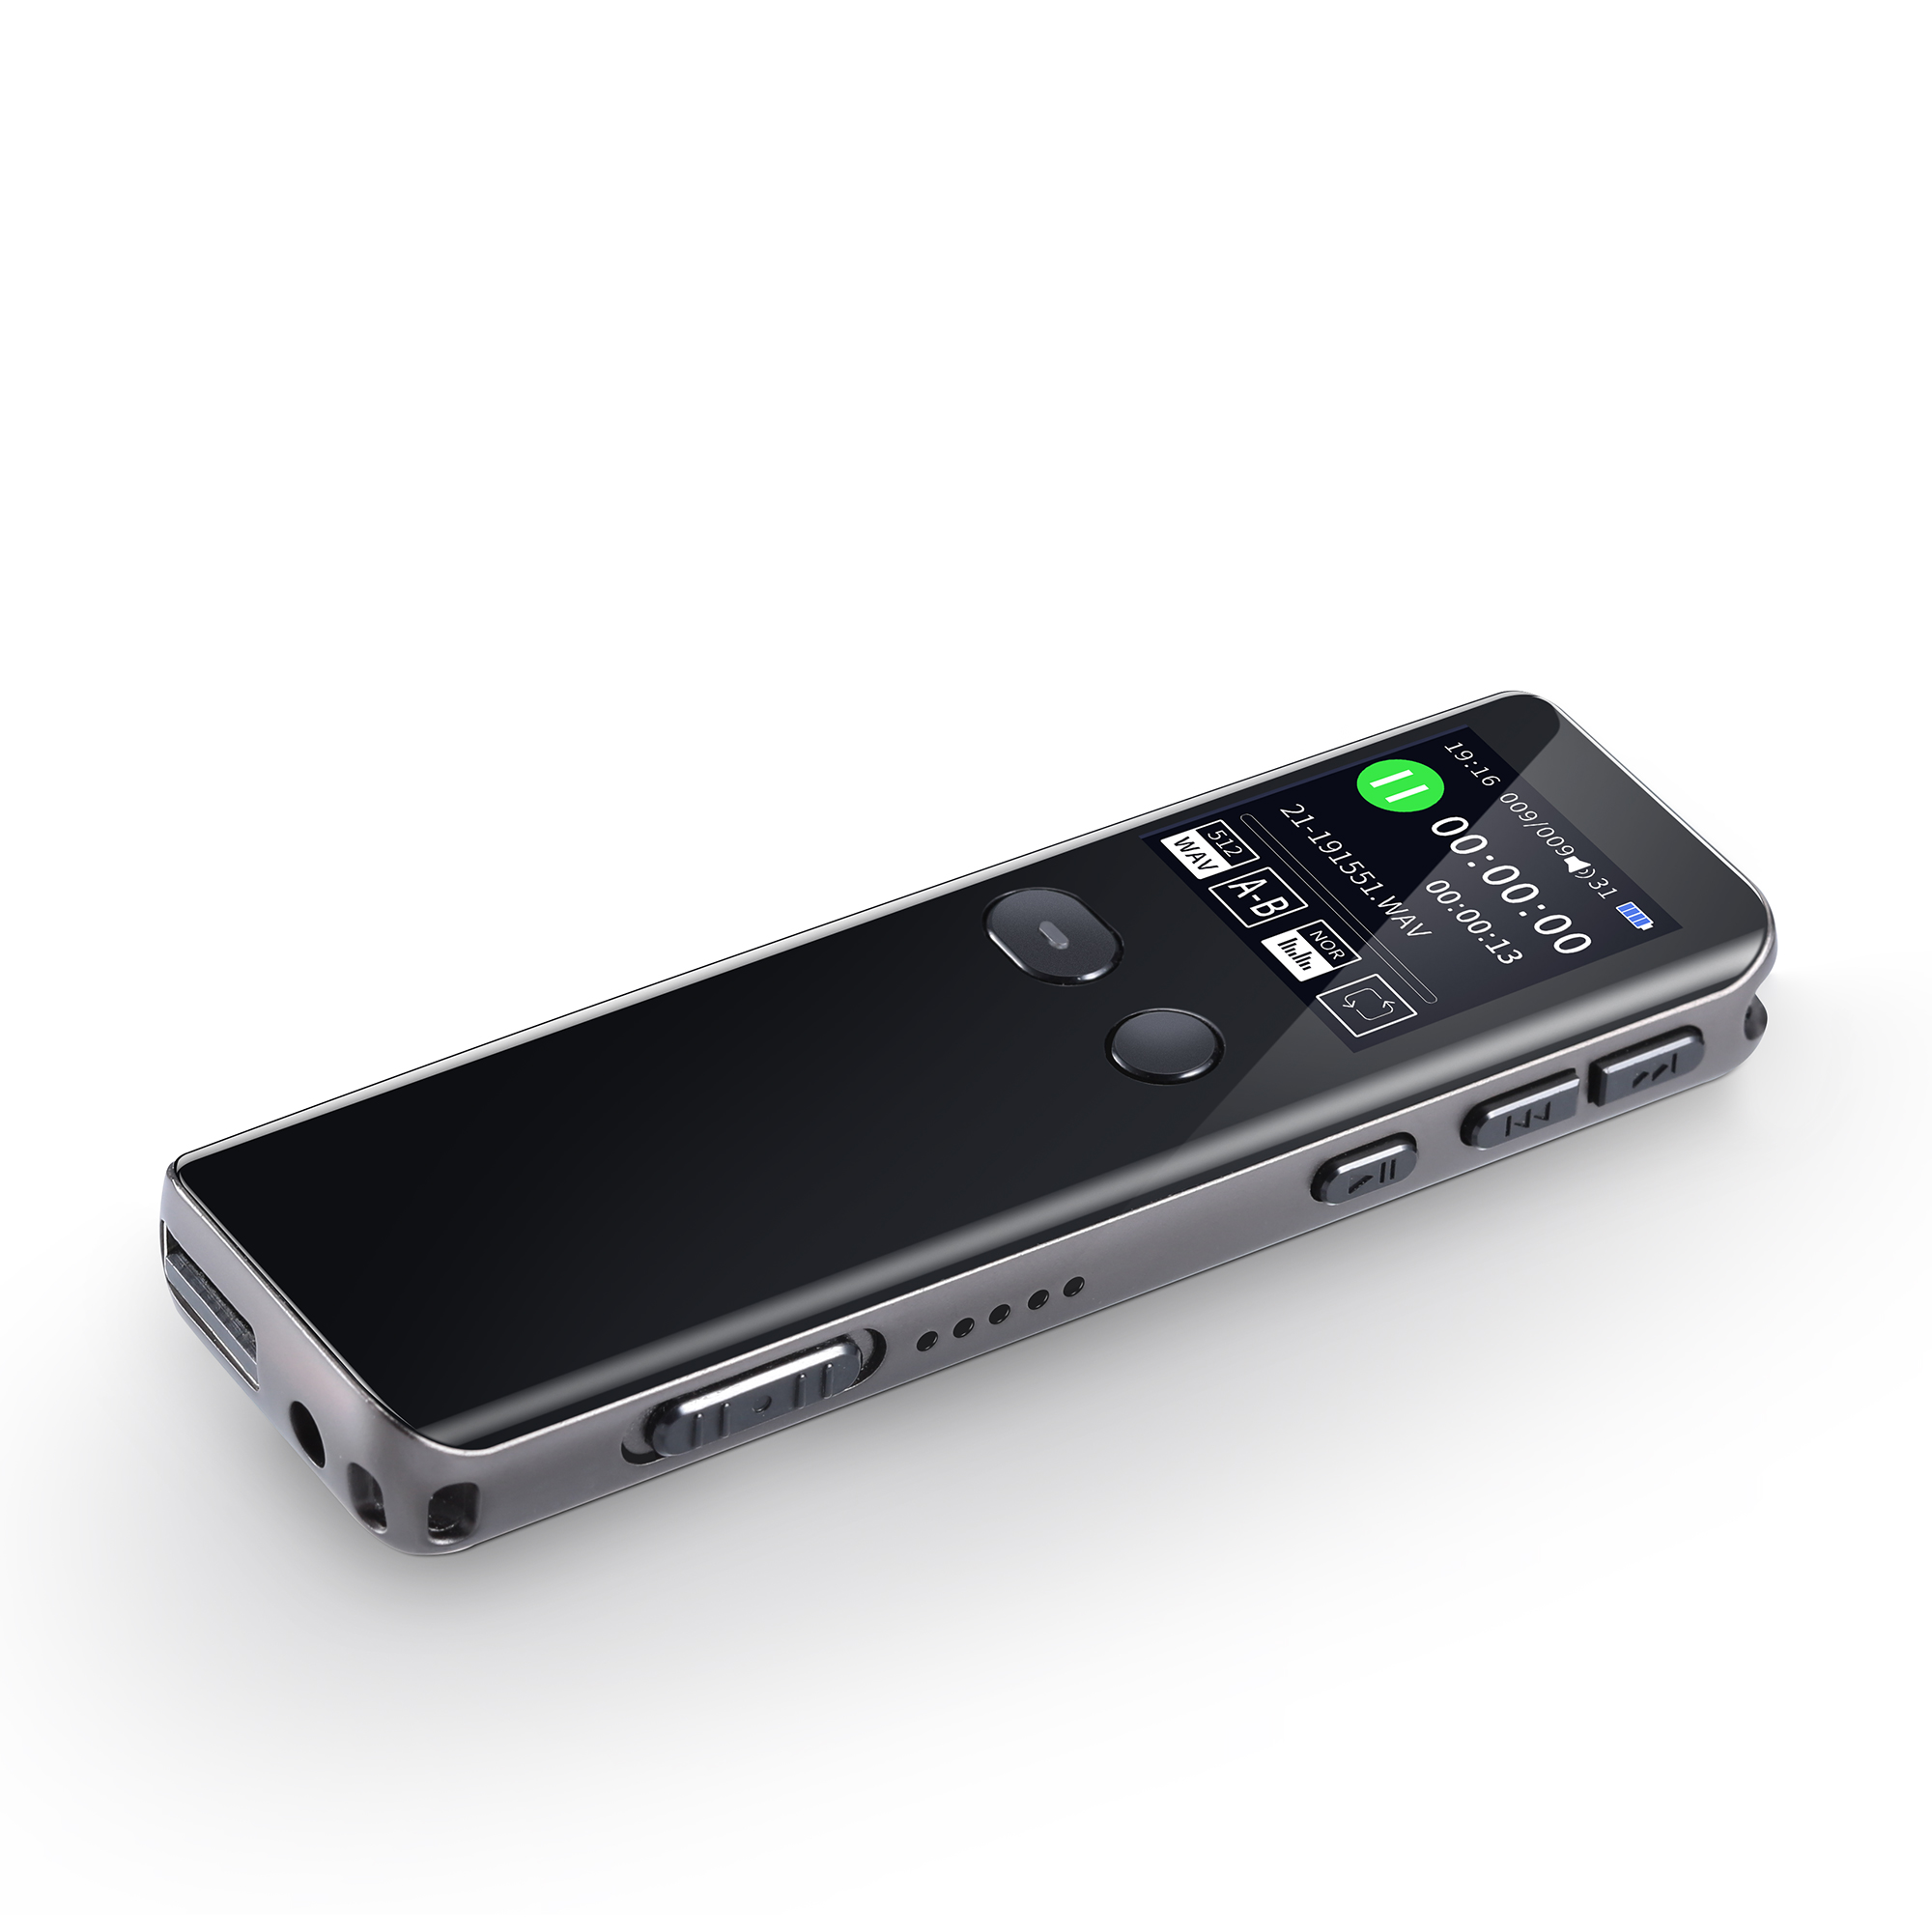 Vandlion V33 Handheld Professional Portable Digital Voice Recorder MP3 Recording Pen USB 2.0 Plug Audio Interface Record Players